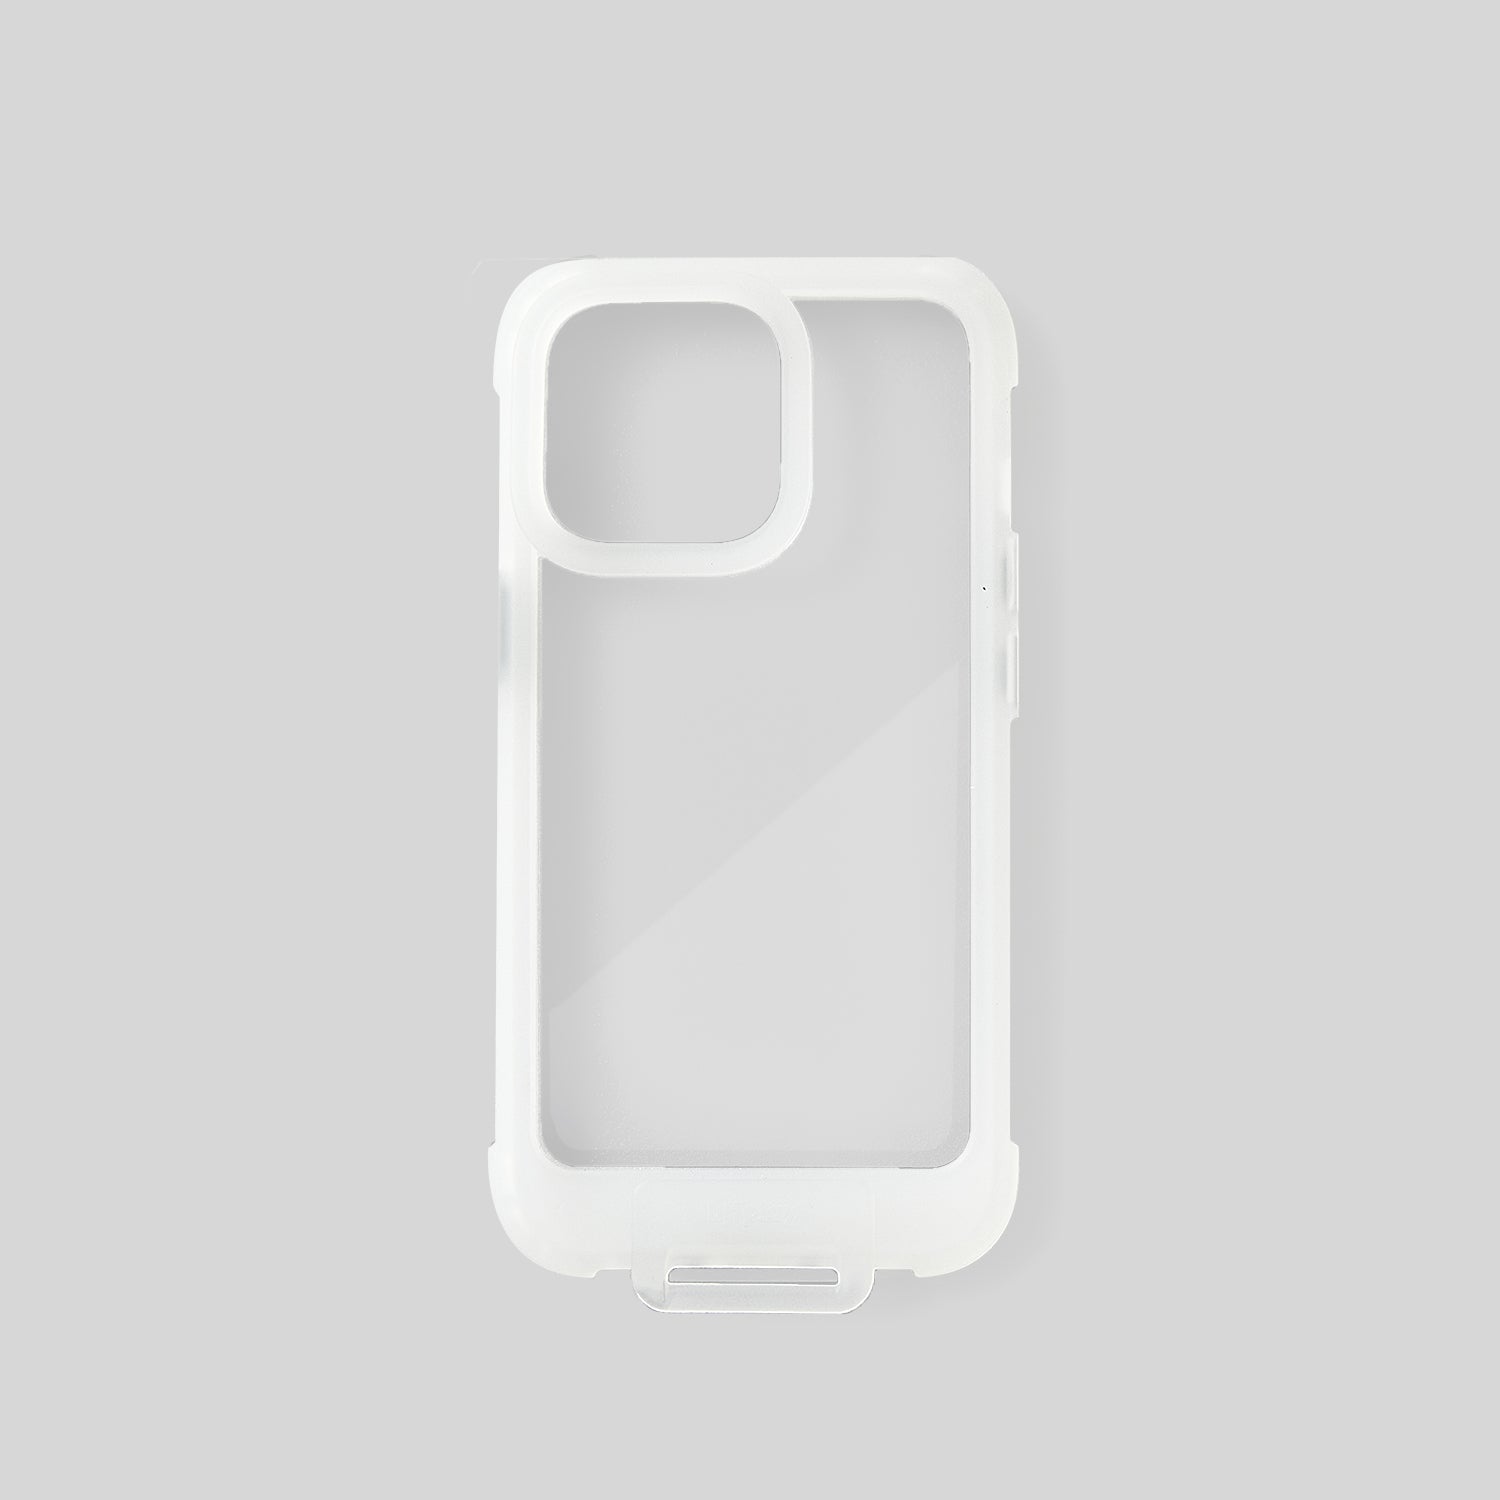 Wander Case 隨行殼 for iPhone 13 系列 透白色 (附贈貼紙 01 都會款）